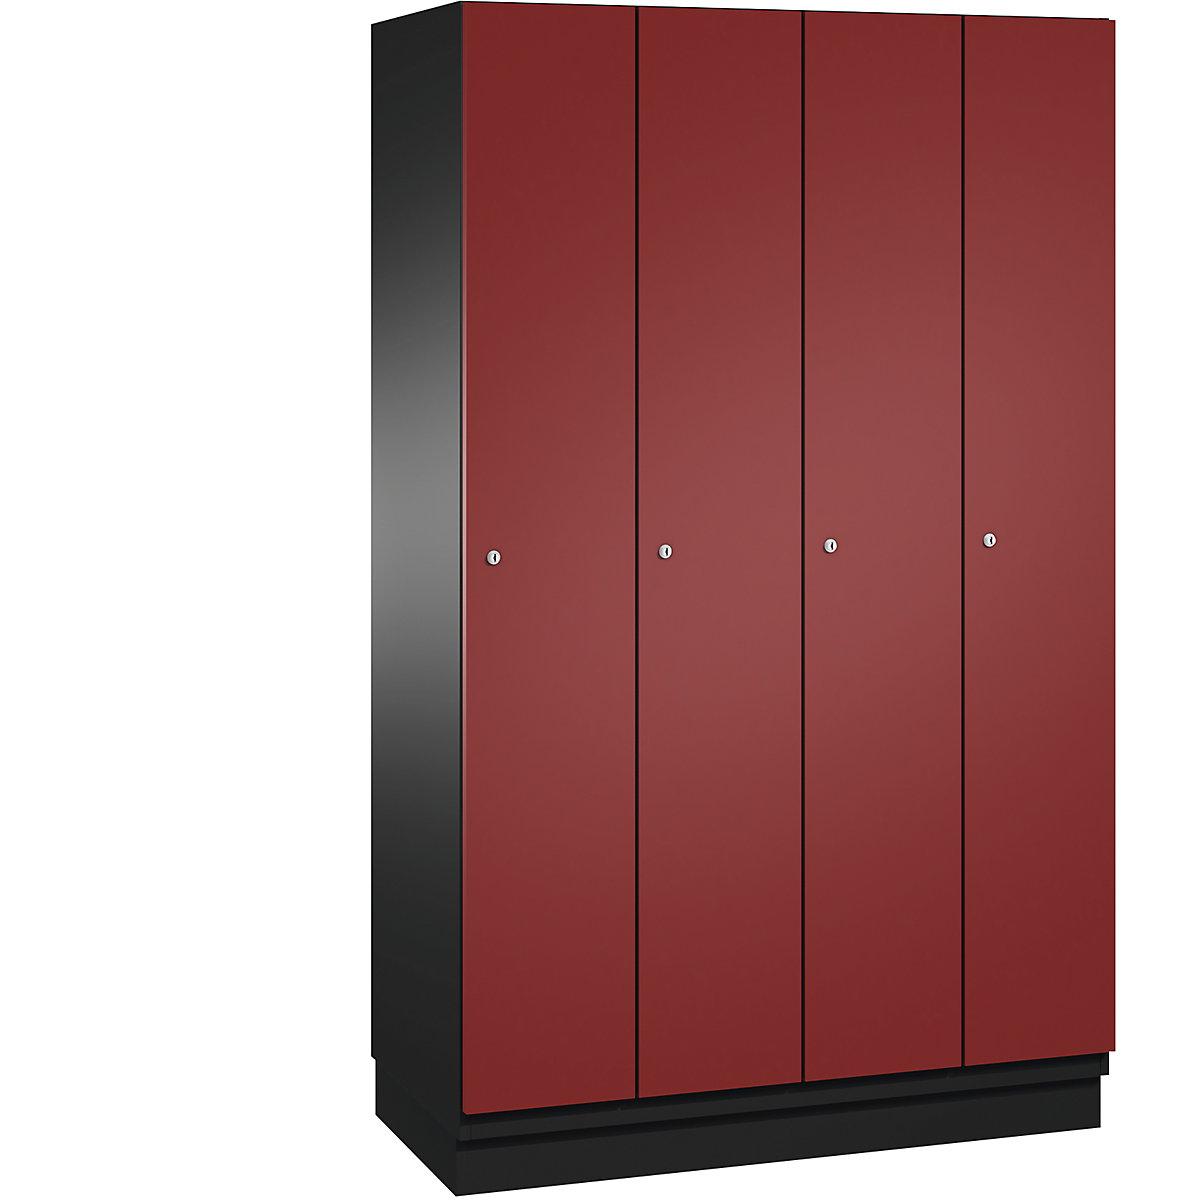 CAMBIO cloakroom locker with sheet steel doors – C+P, 4 compartments, 1200 mm wide, body black grey / door ruby red-4